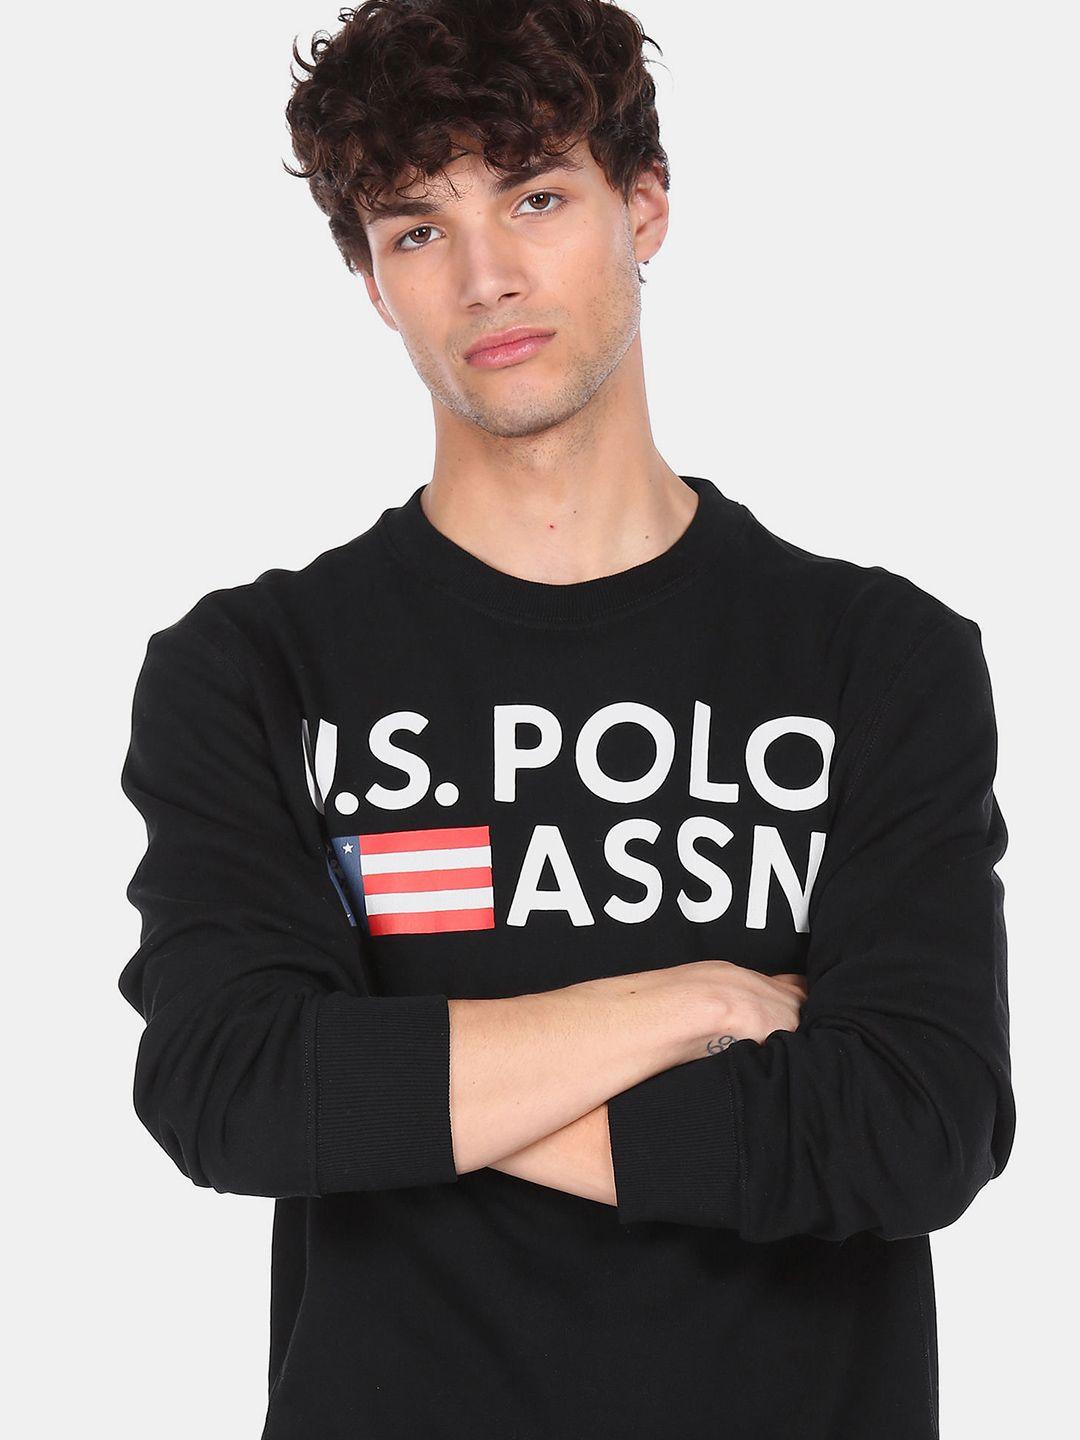 u.s.-polo-assn.-denim-co.-men-black-typography-printed-sweatshirt